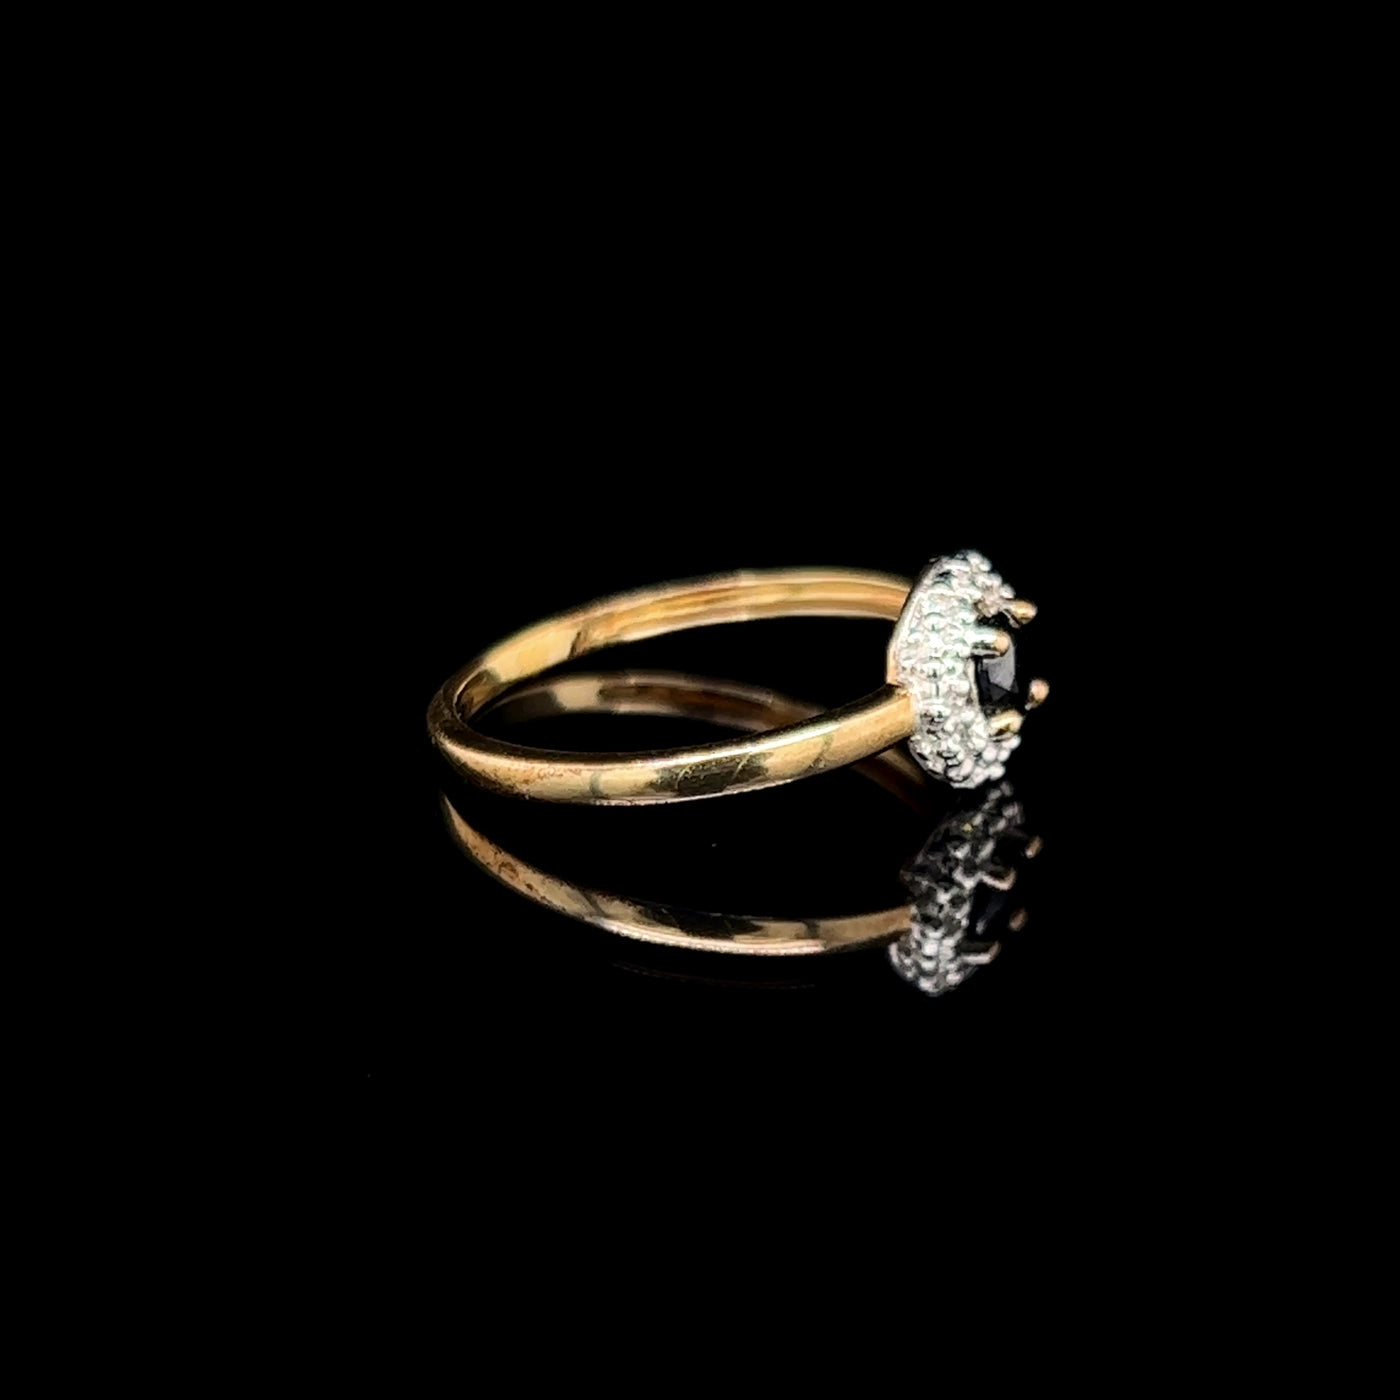 Yellow Gold Sapphire & Diamond Ring